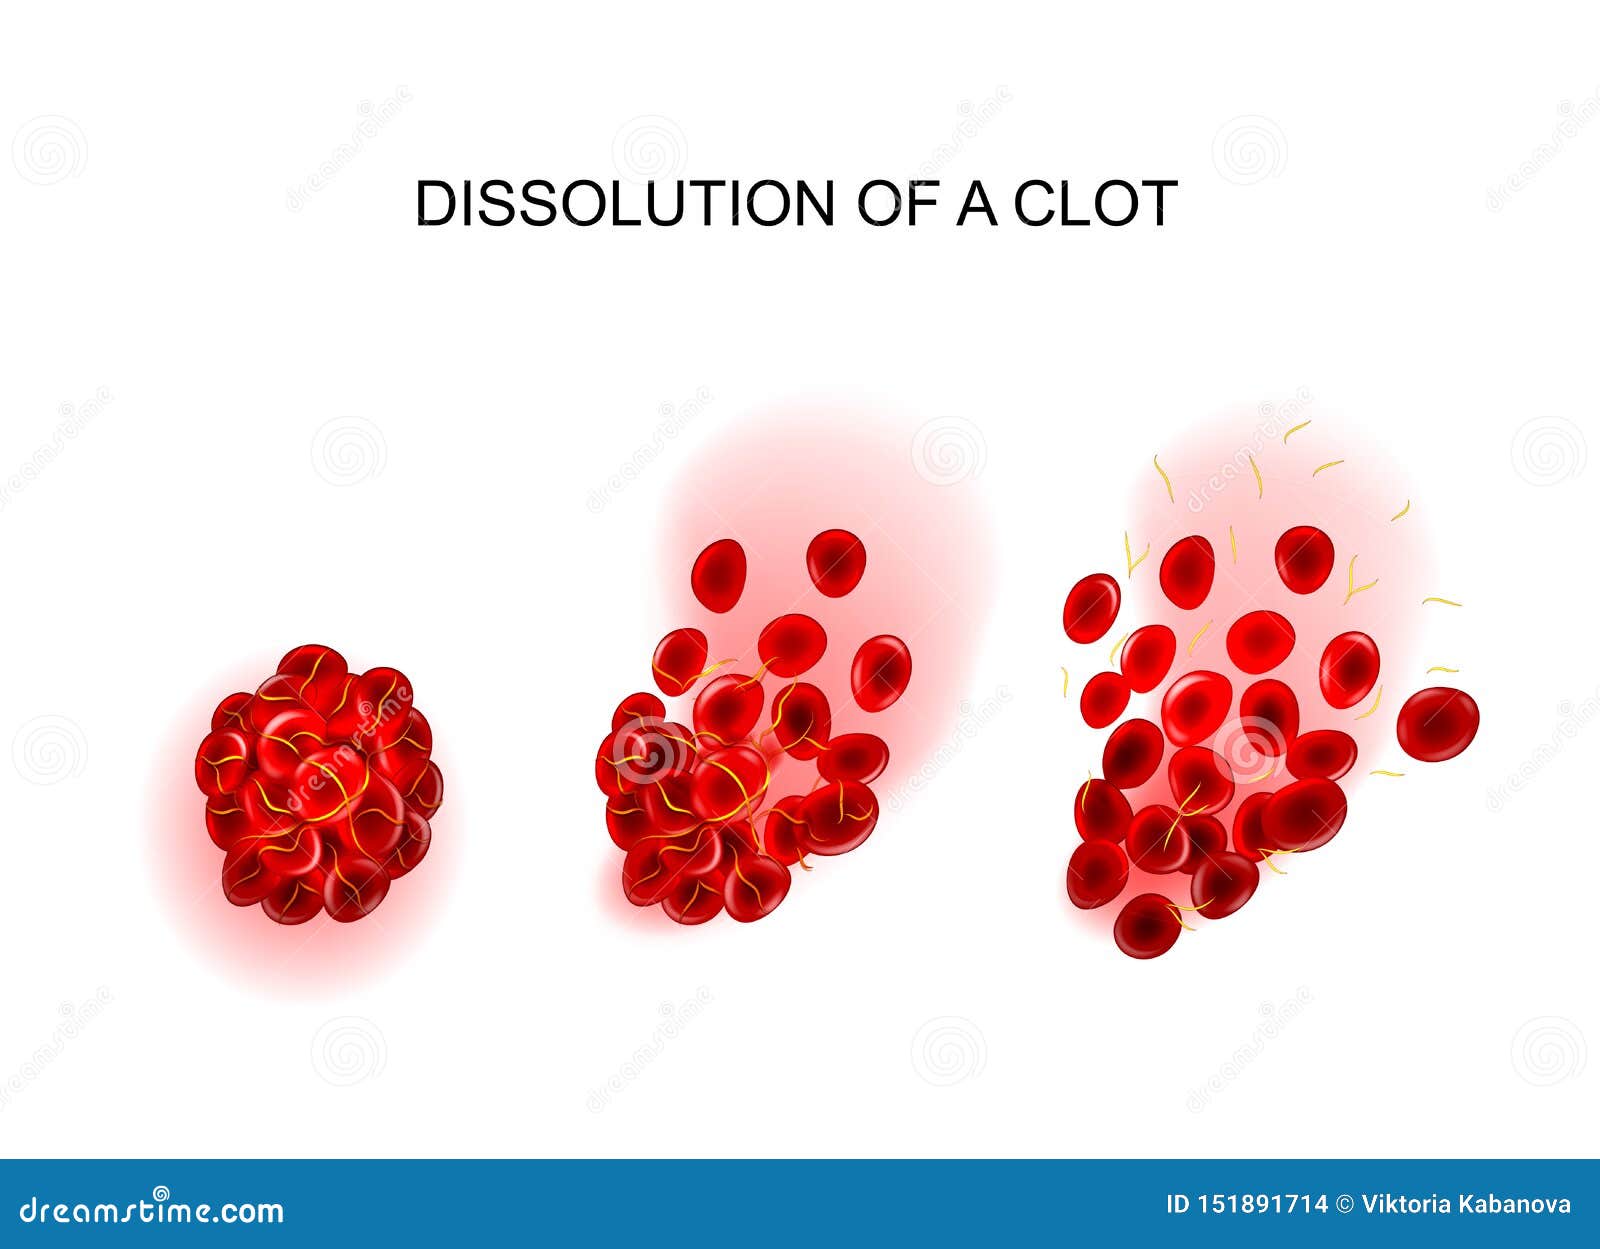 dissolution of the clot. thrombolysis